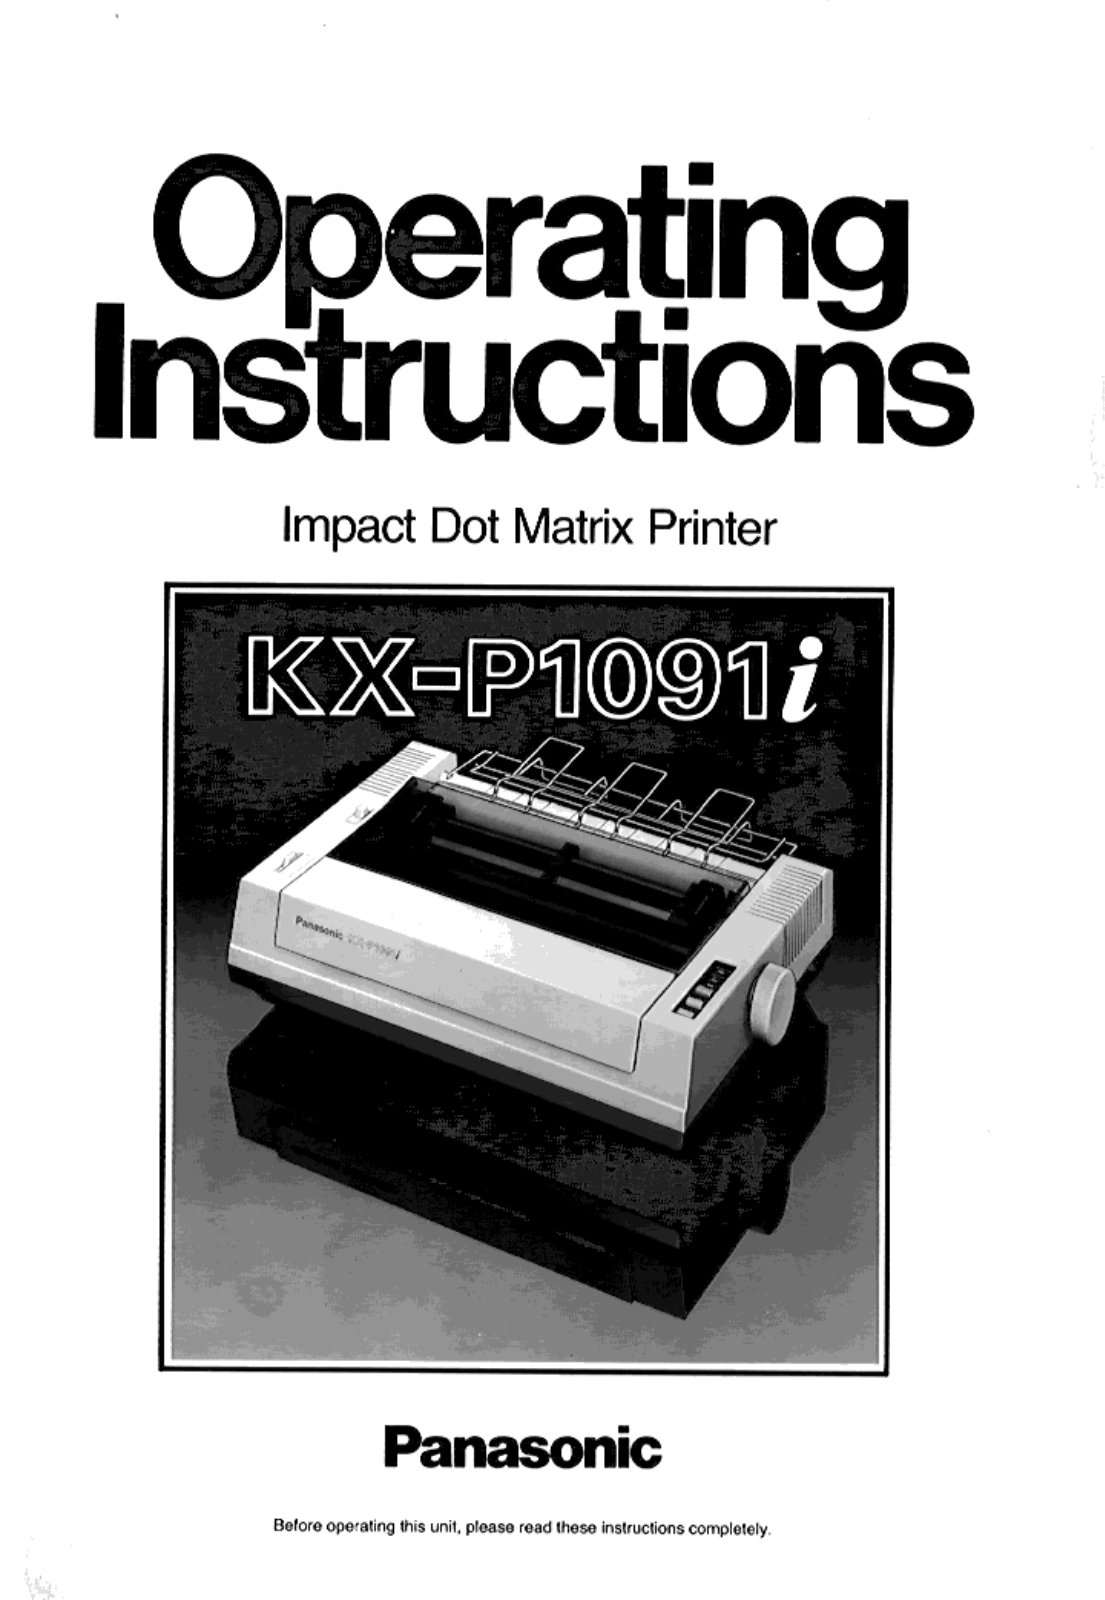 Panasonic kx-p1091 Operation Manual